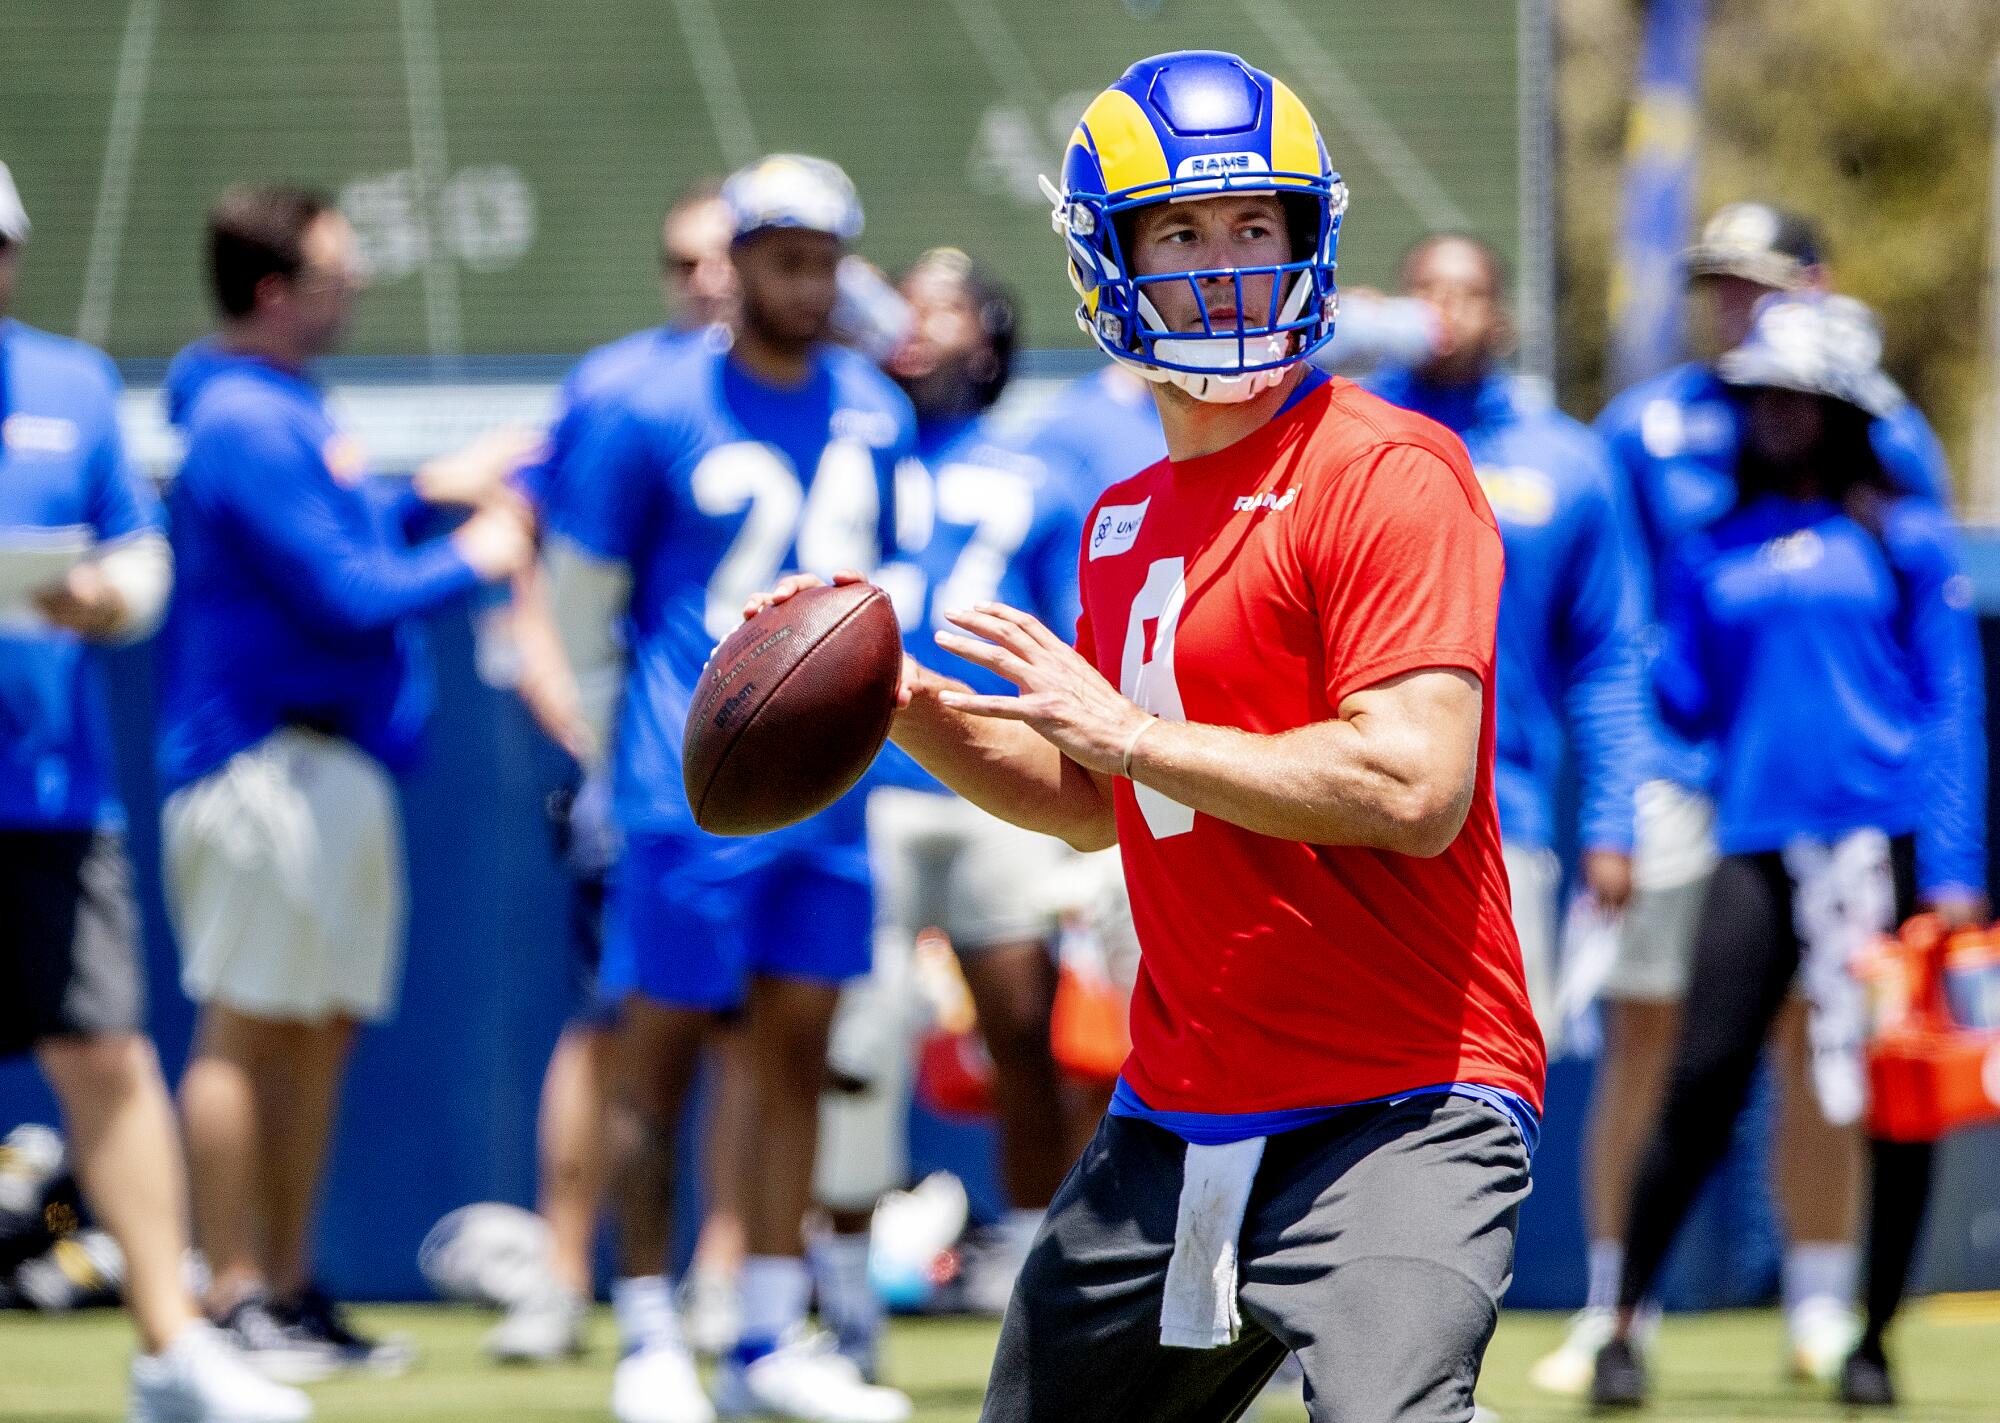  Rams quarterback Matthew Stafford looks to pass during training camp.